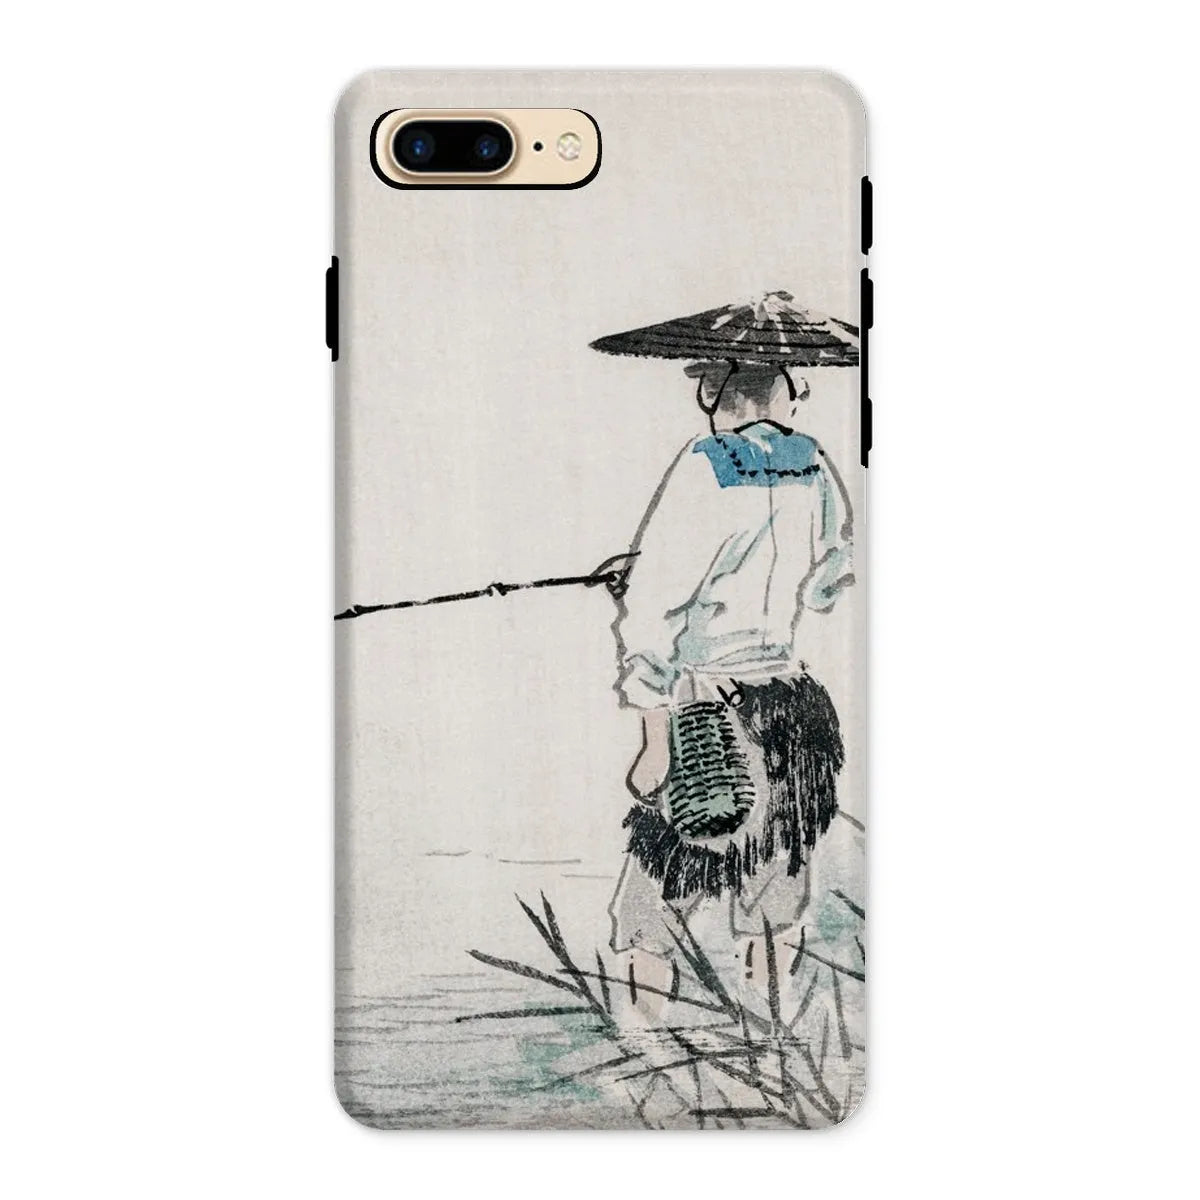 Japanese Fisherman Aesthetic Art Phone Case - Kōno Bairei - Iphone 8 Plus / Matte - Mobile Phone Cases - Aesthetic Art